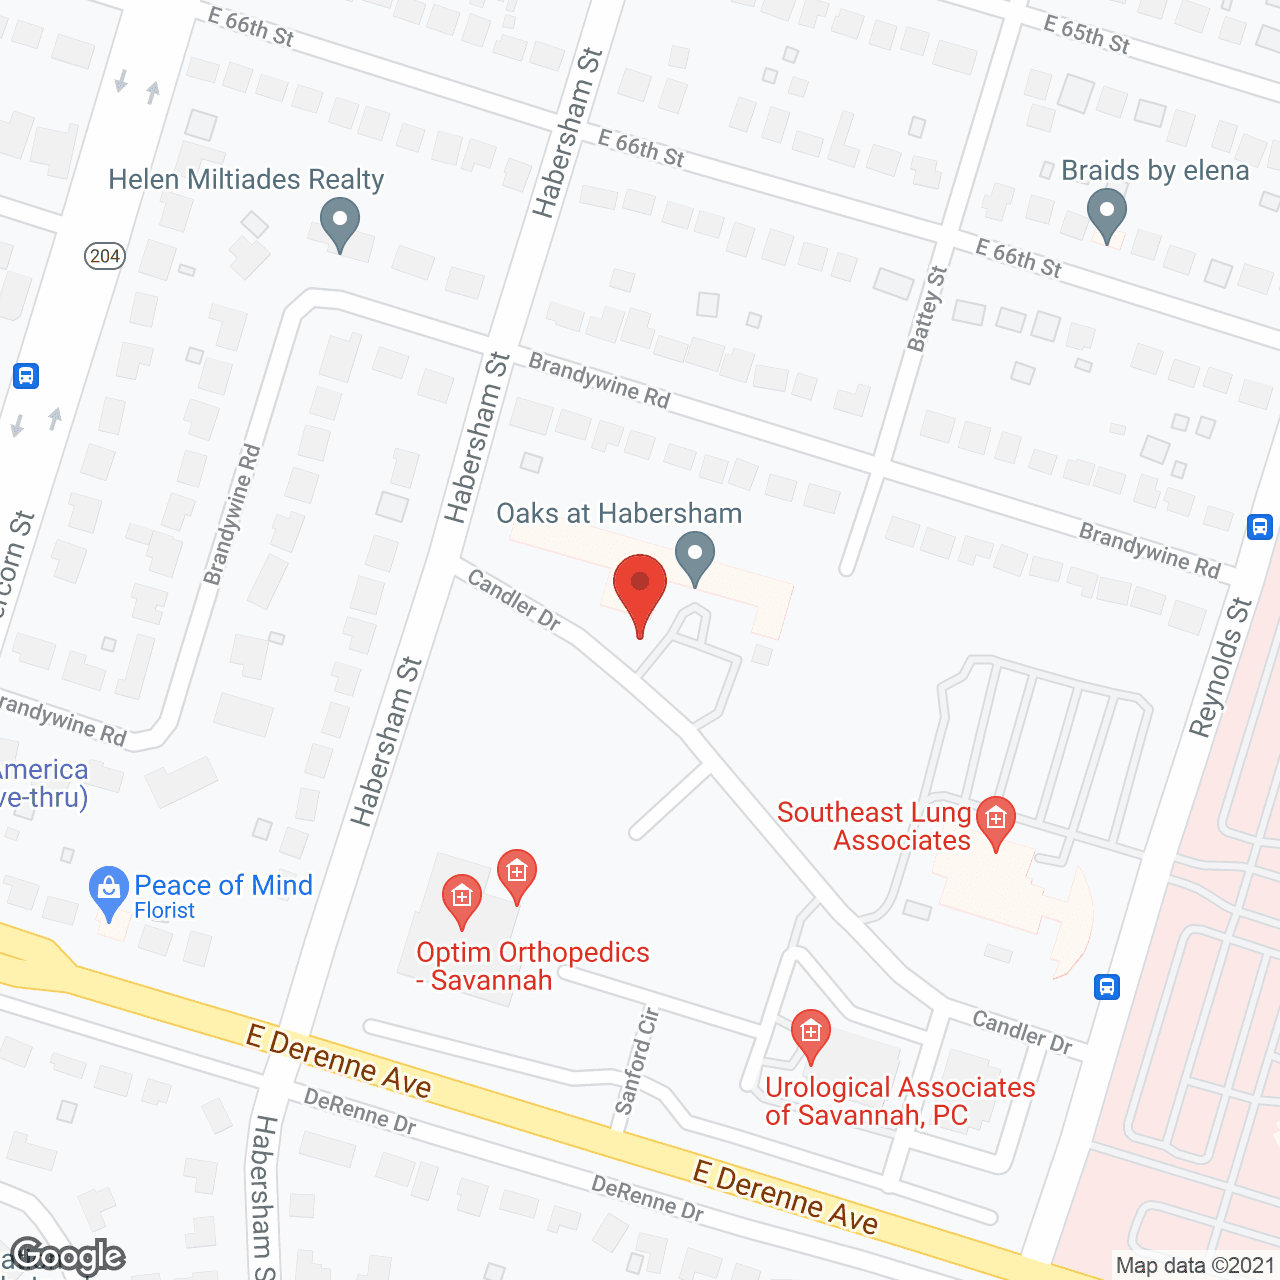 Oaks at Habersham in google map